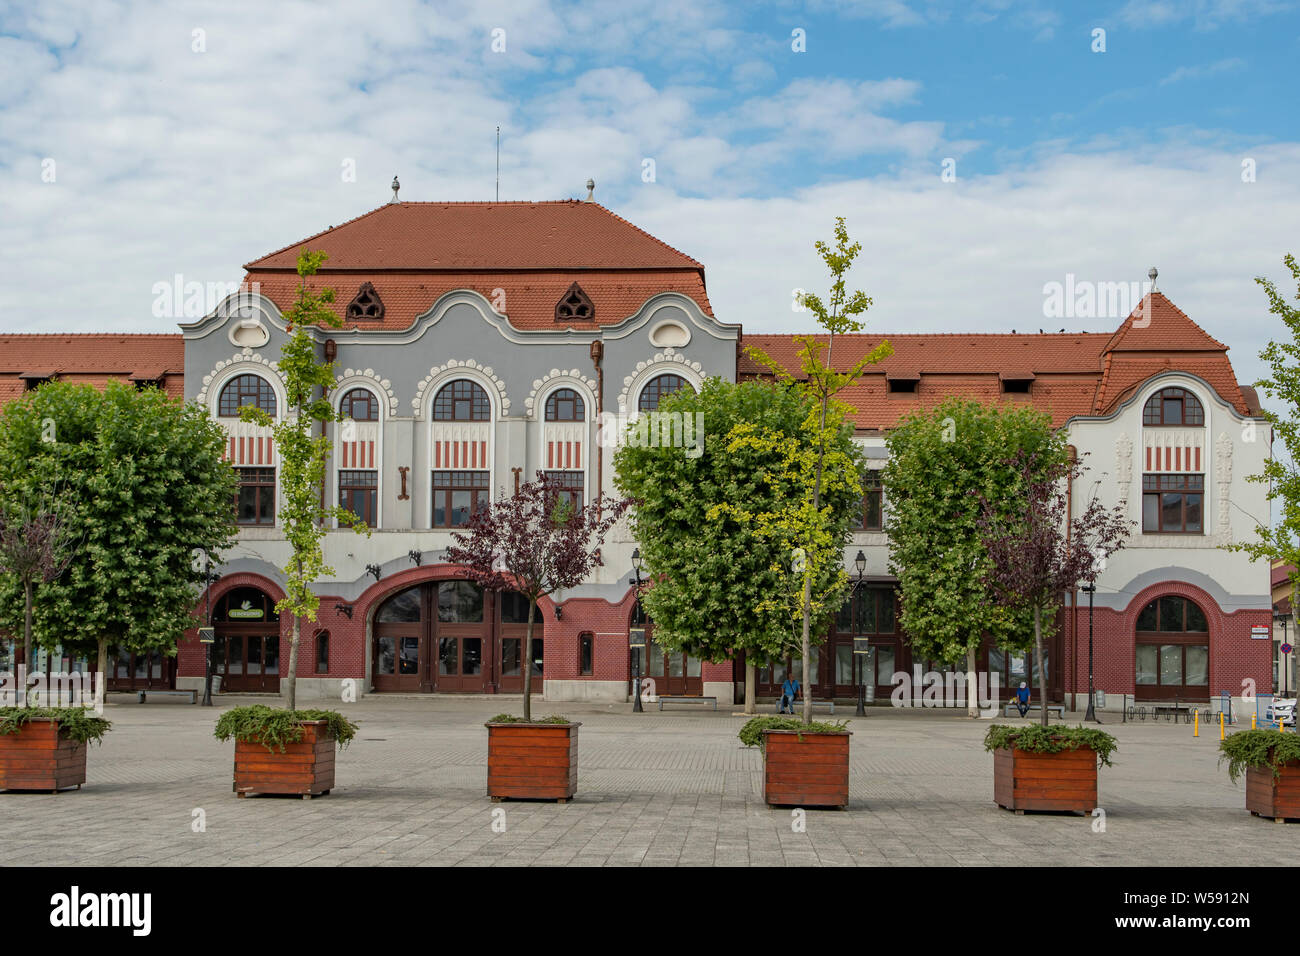 Millenium Square, Old Town, Baia Mare, Romania Stock Photo